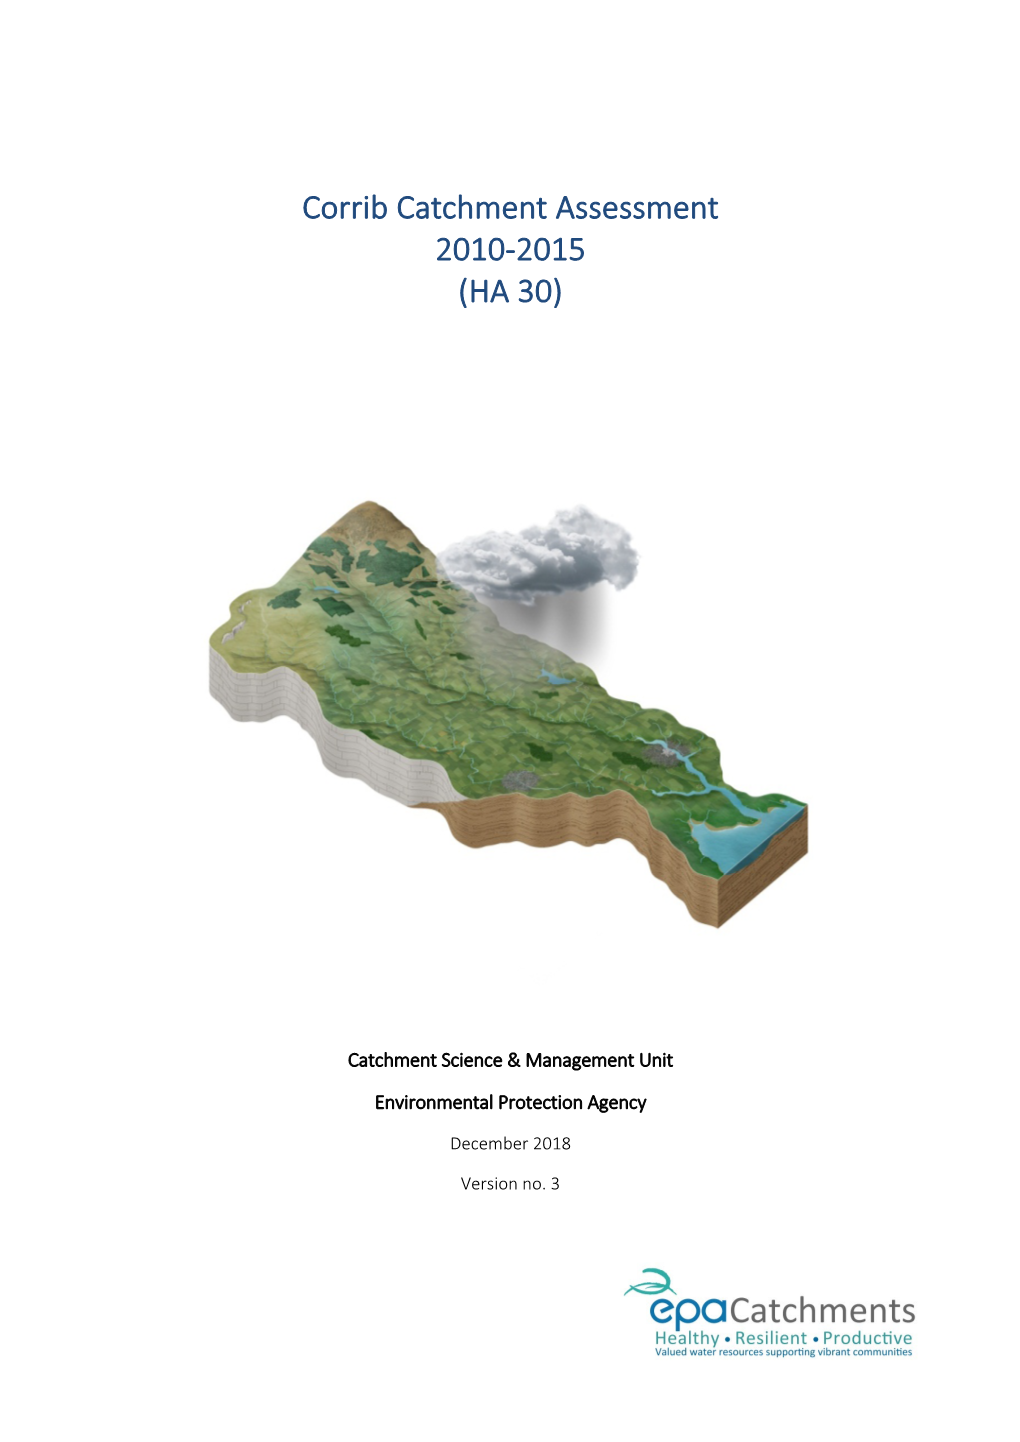 Corrib Catchment Assessment 2010-2015 (HA 30)